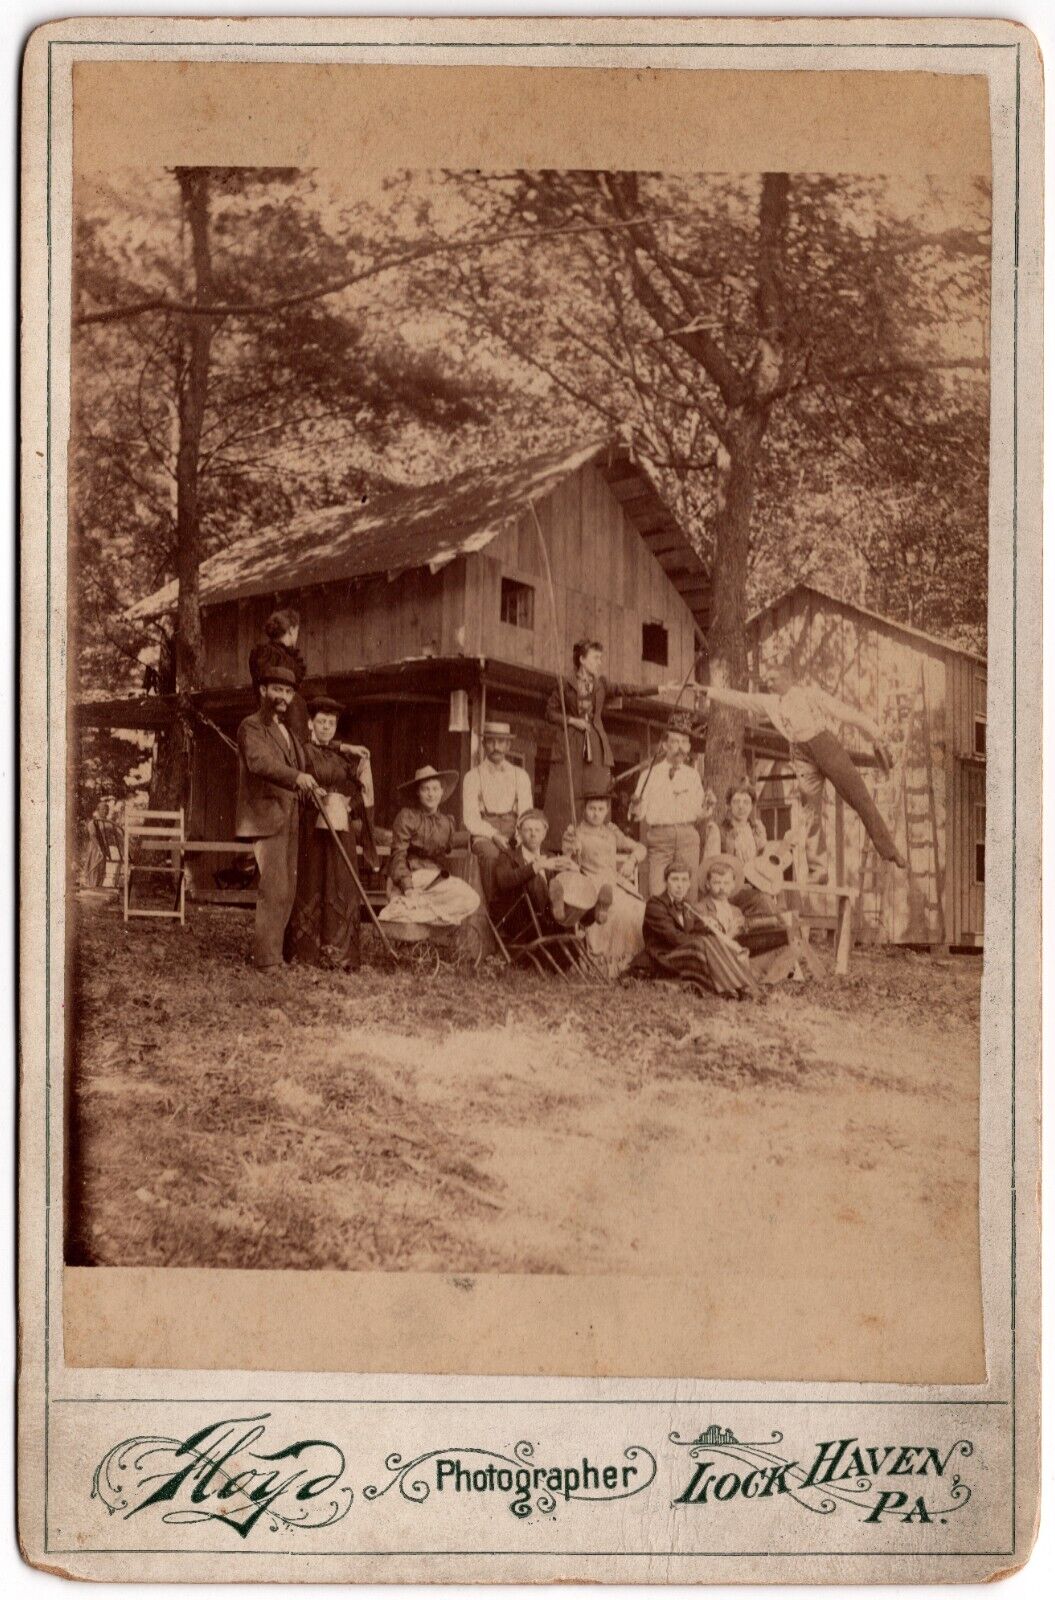 CIRCA 1890s CABINET CARD FLOYD  FAMILY AT HUNTING FISHING LODGE LOCK HAVEN PA.